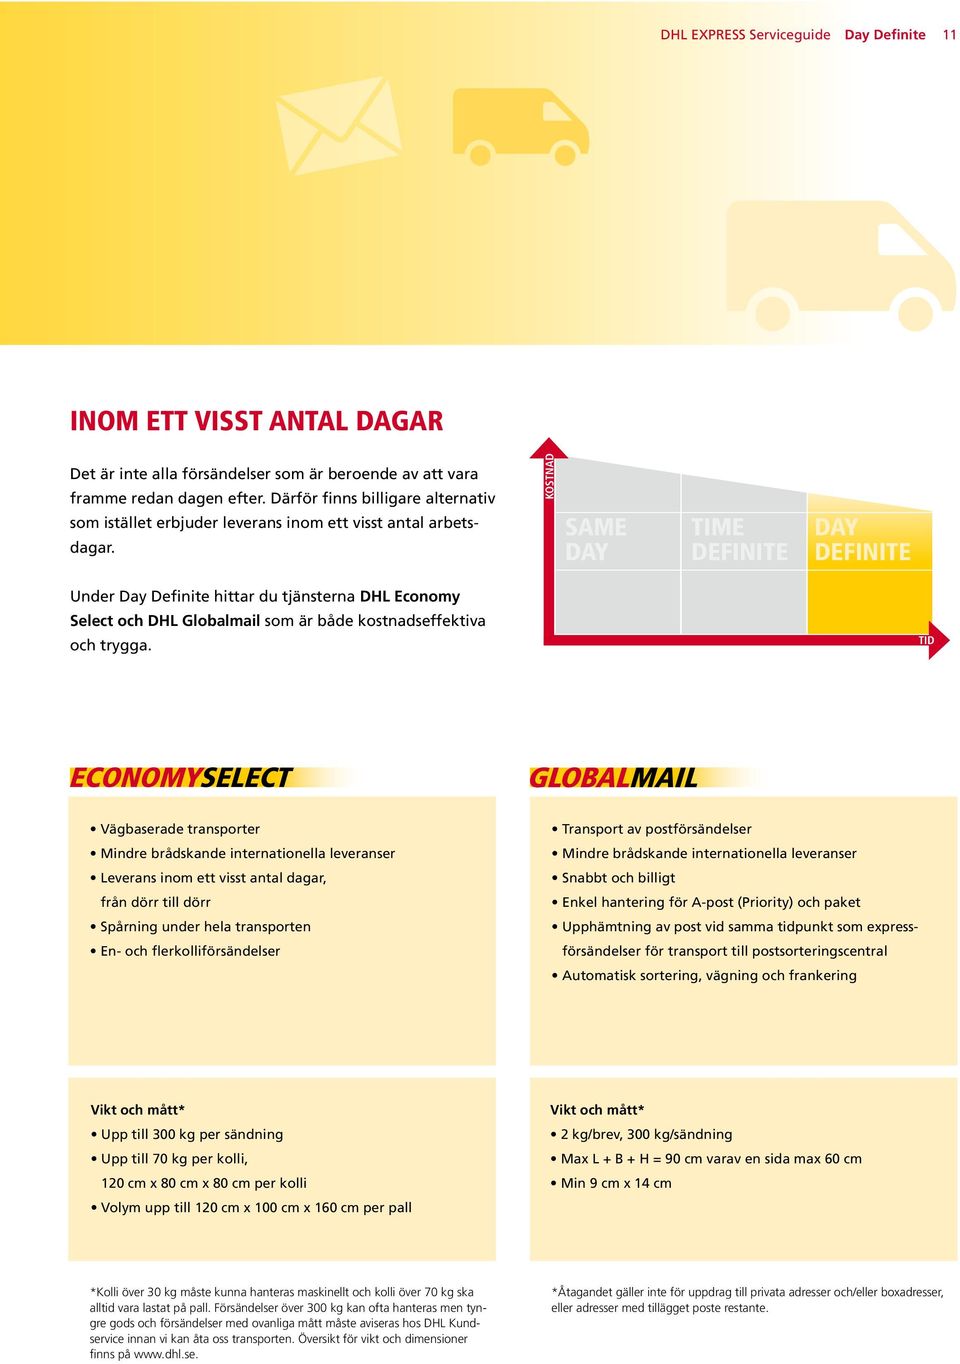 DHL EXPRESS SERVICEGUIDE DIN GUIDE TILL DHL EXPRESS TJÄNSTER - PDF Free  Download